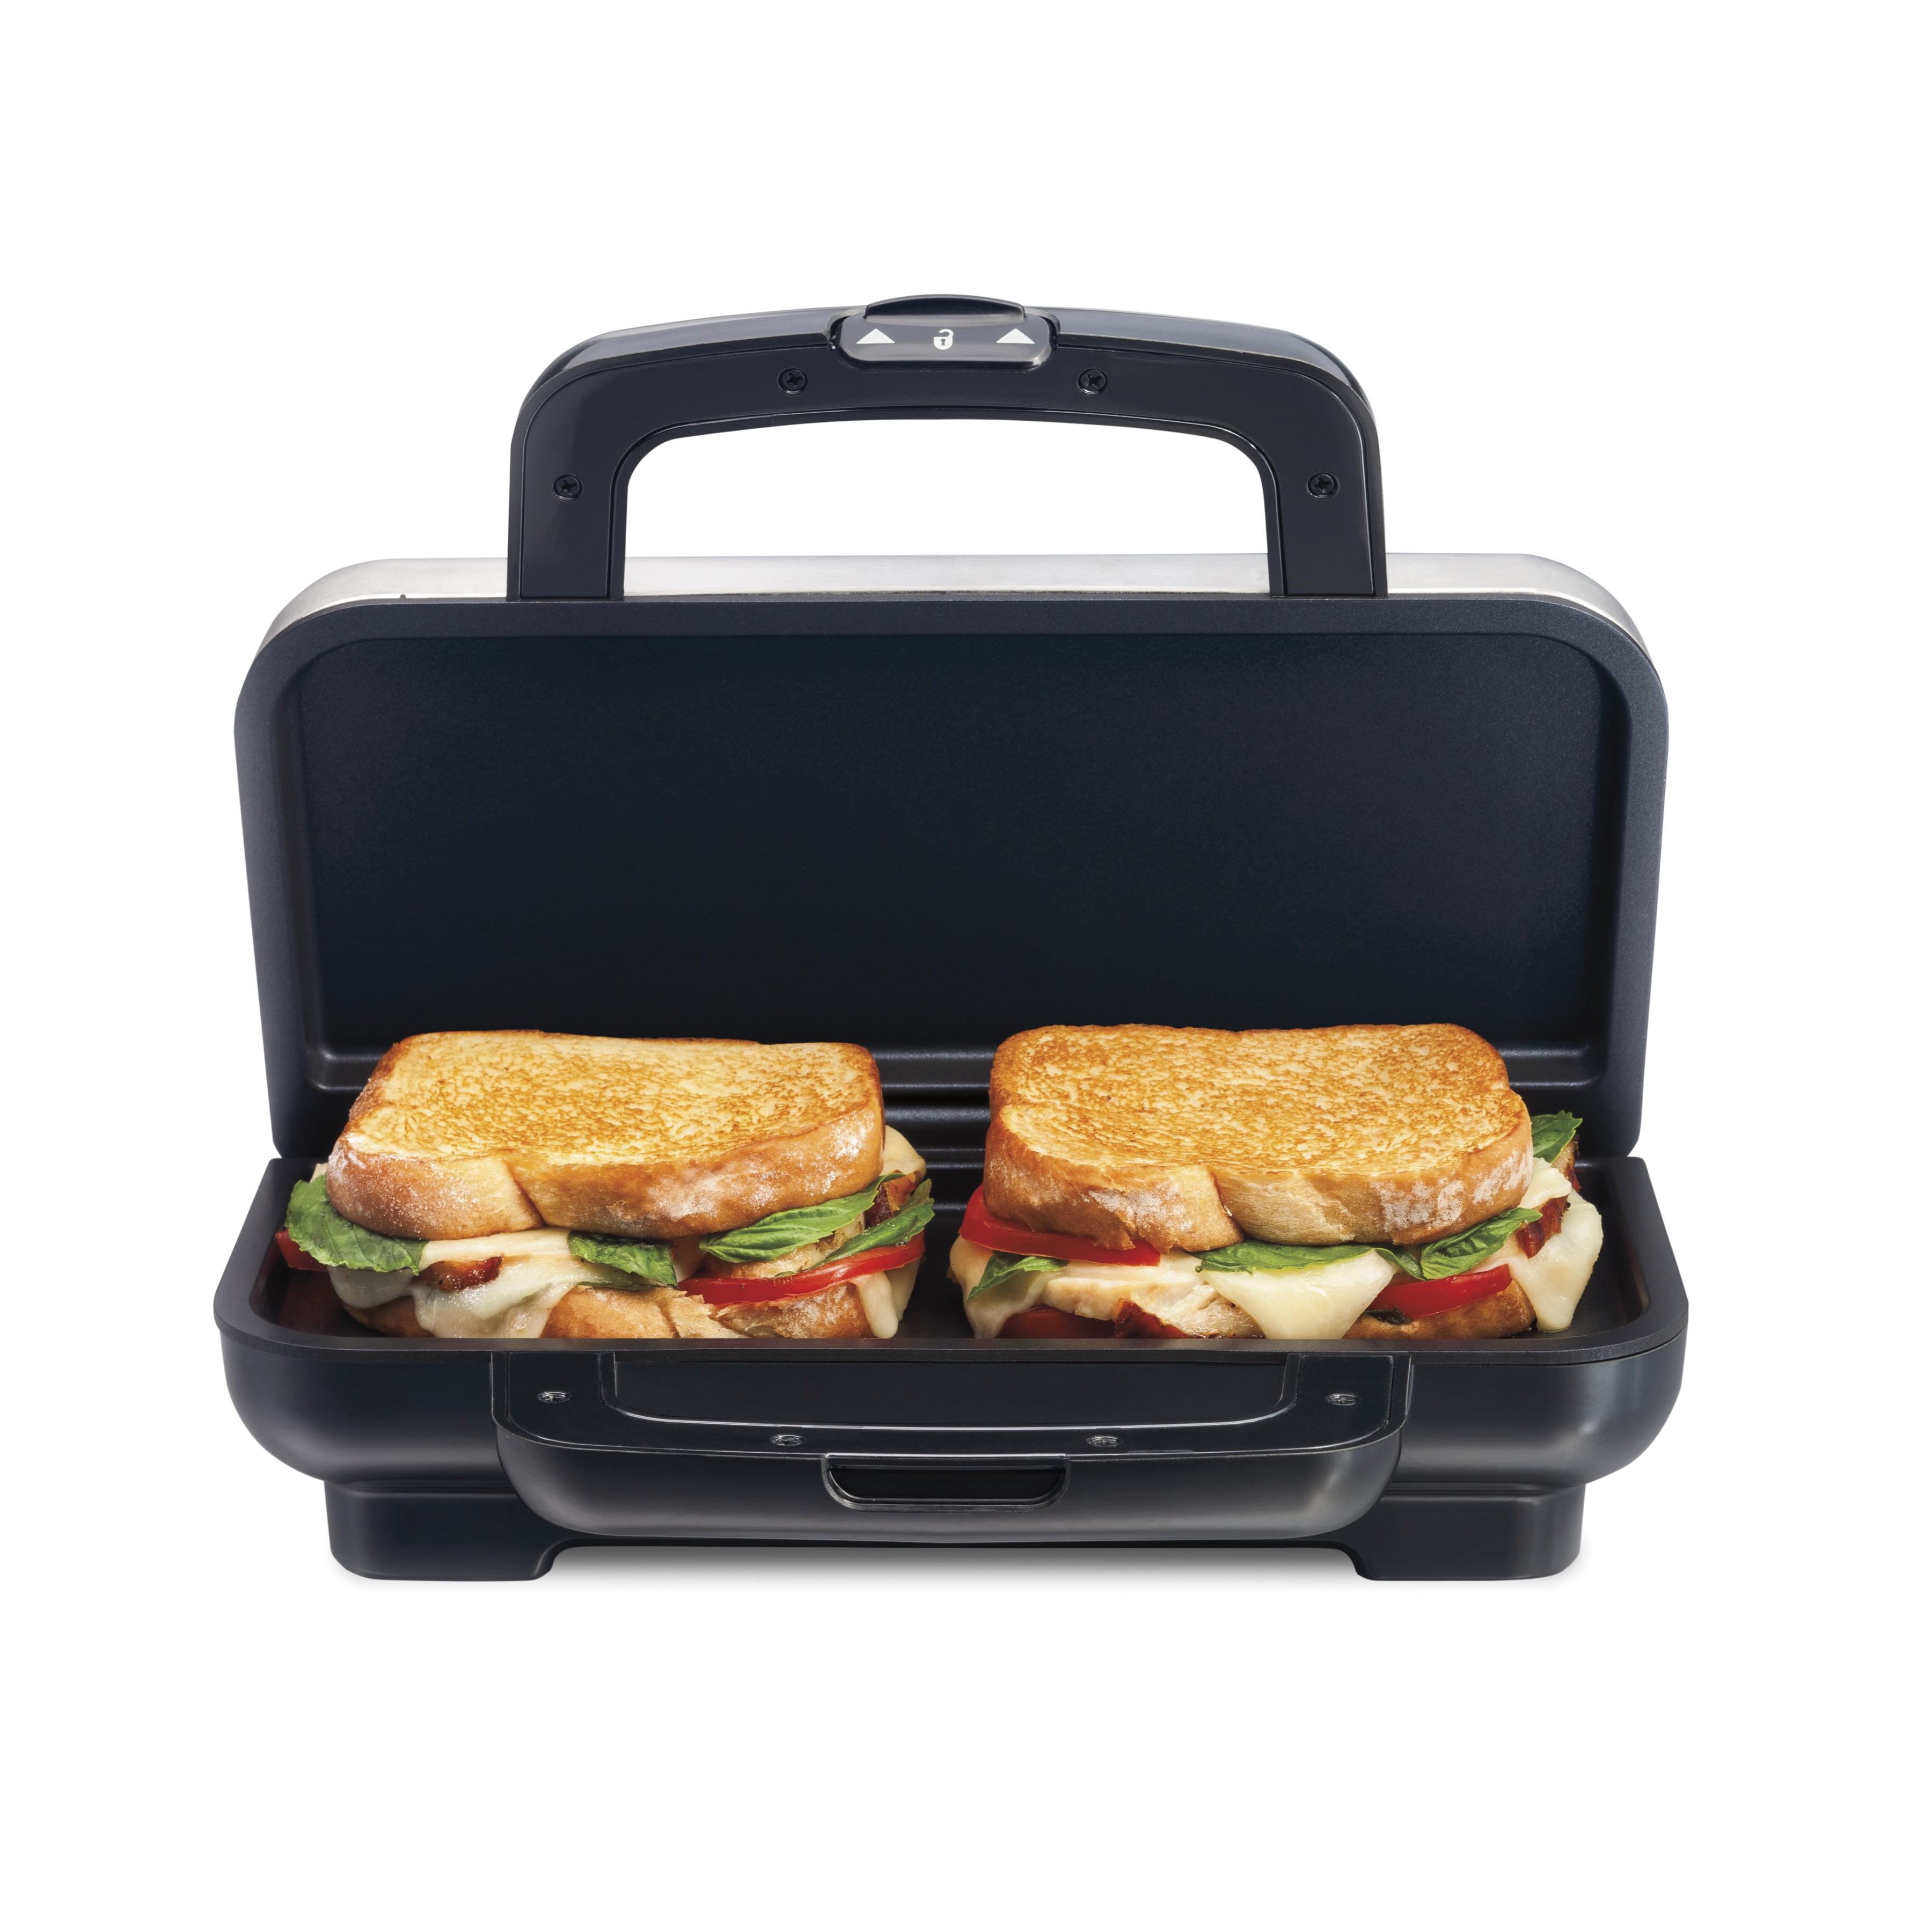 Proctor Silex Sandwich Maker Toaster PANINI press Nonstick Grill FAST FREE SHIP! 